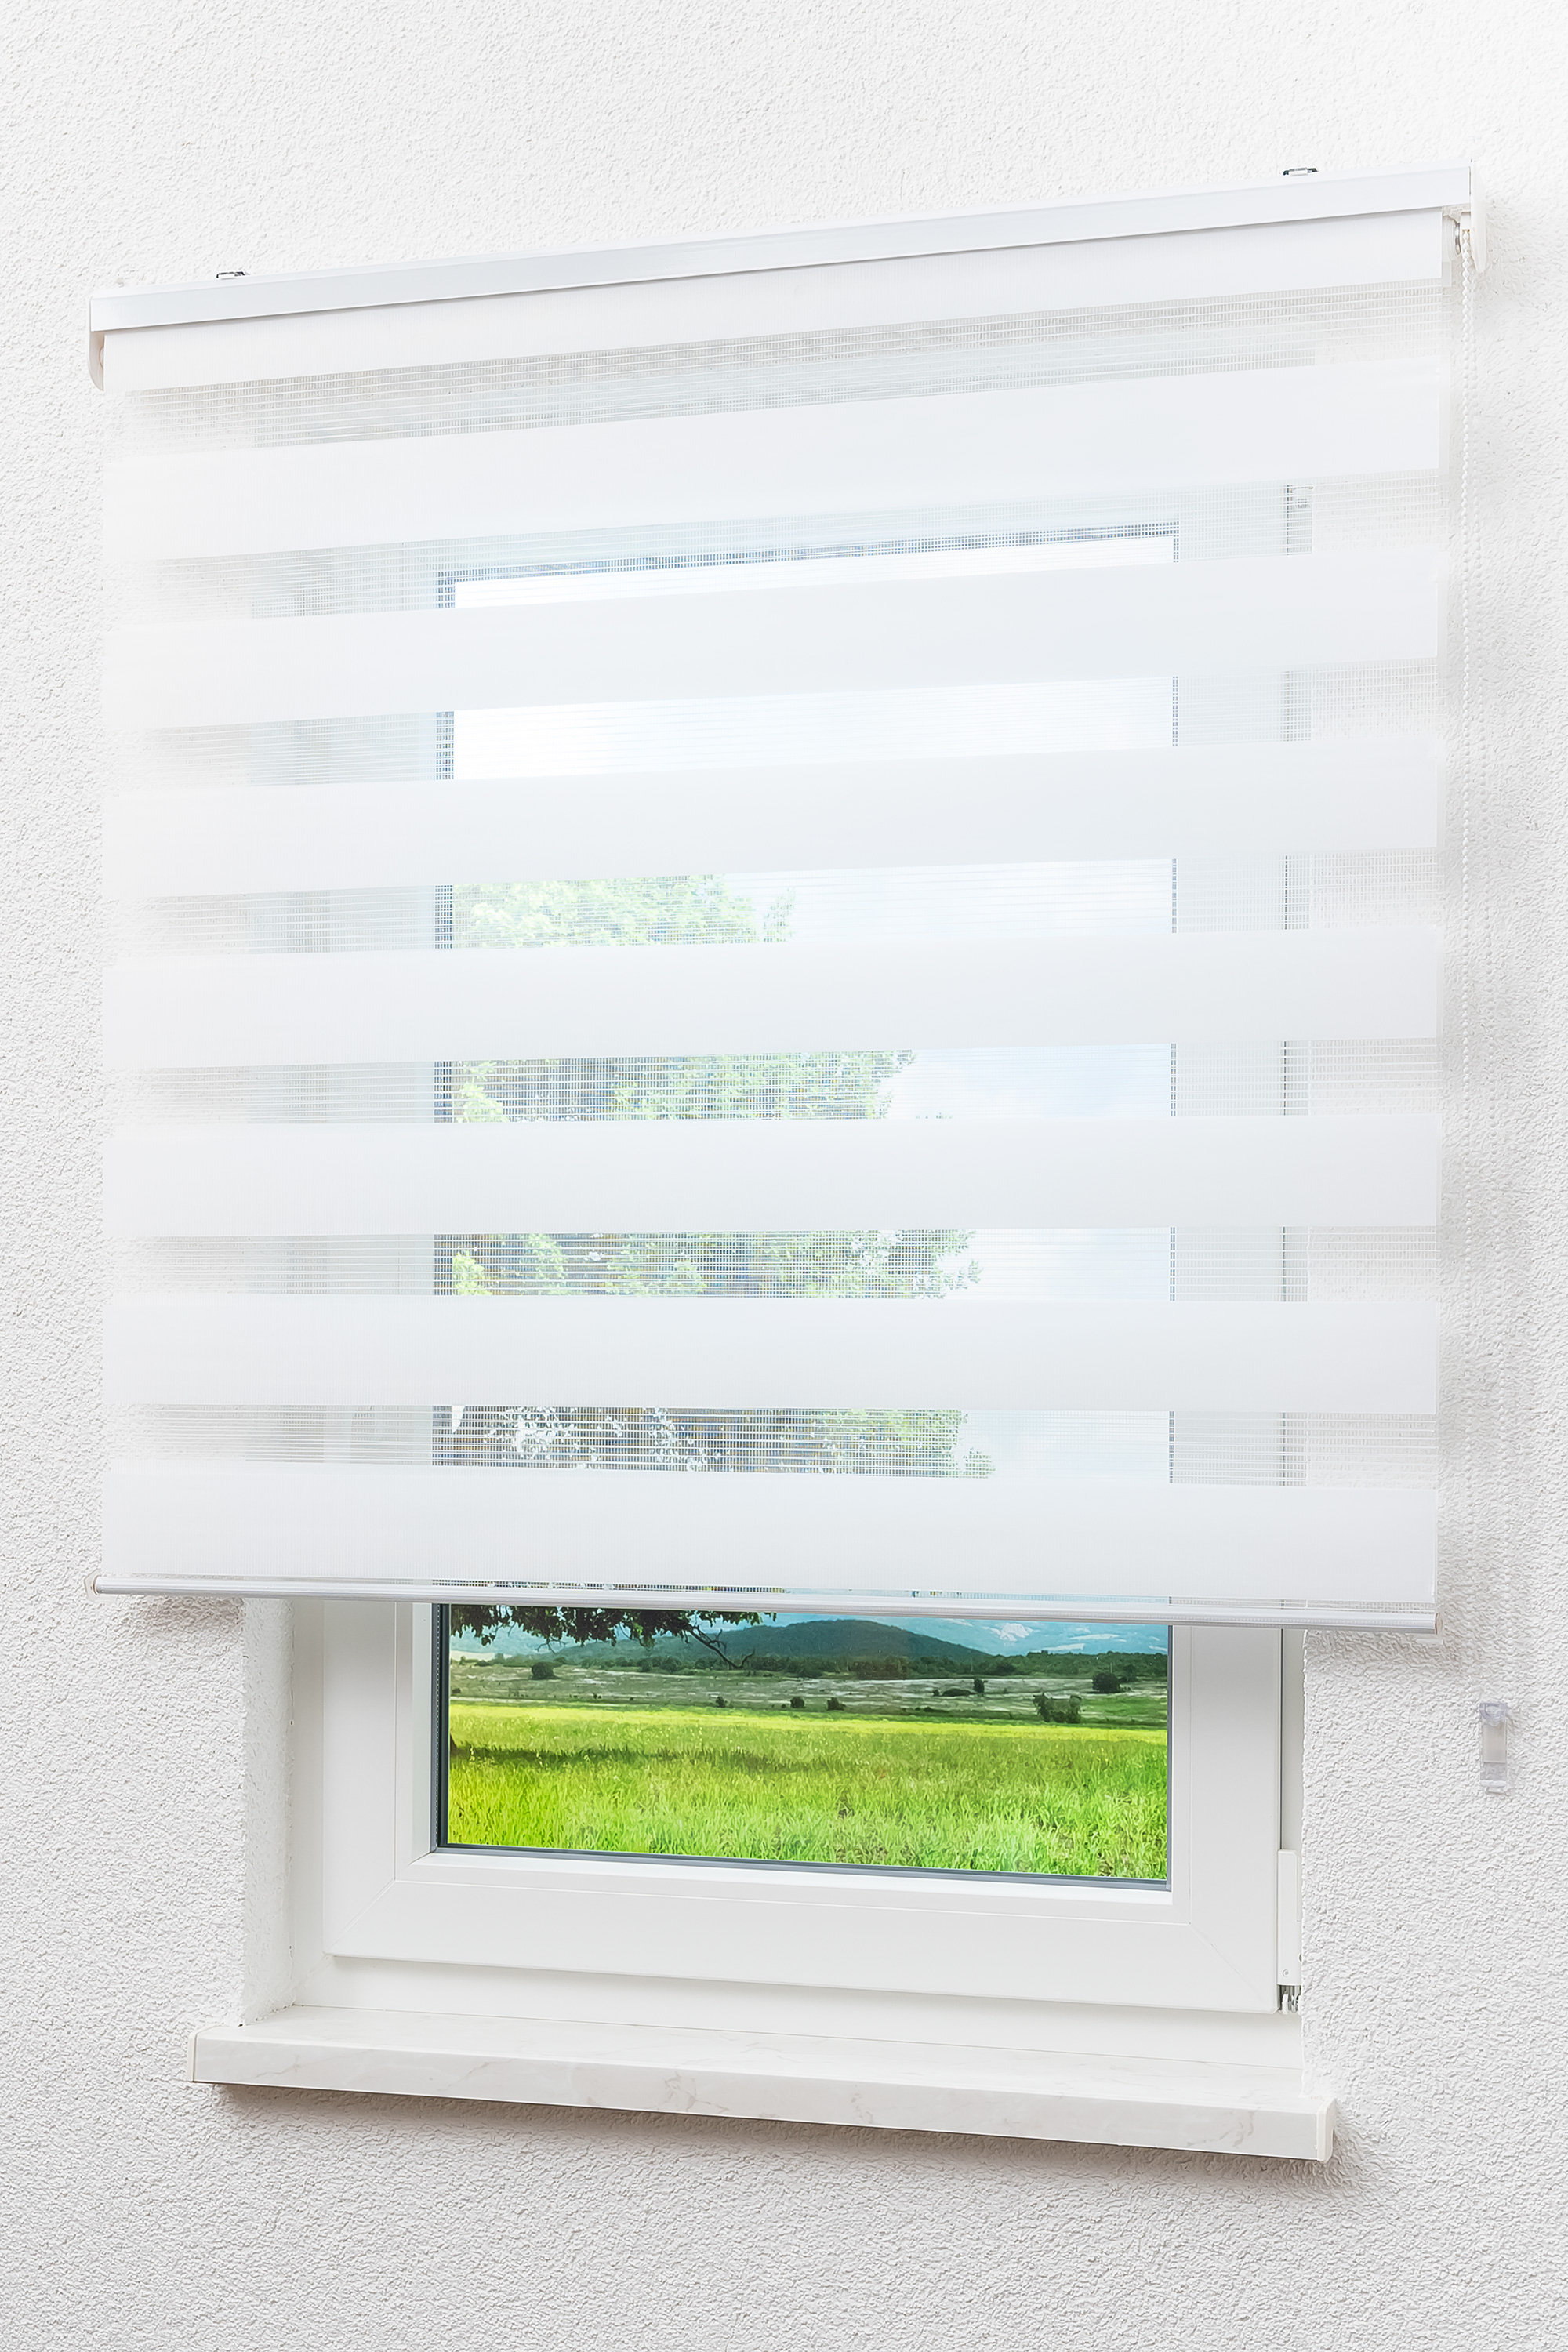 Duo Rollo Doppelrollo Solid mit Blende blickdicht Fenster Tür Lysel Outlet  | eBay